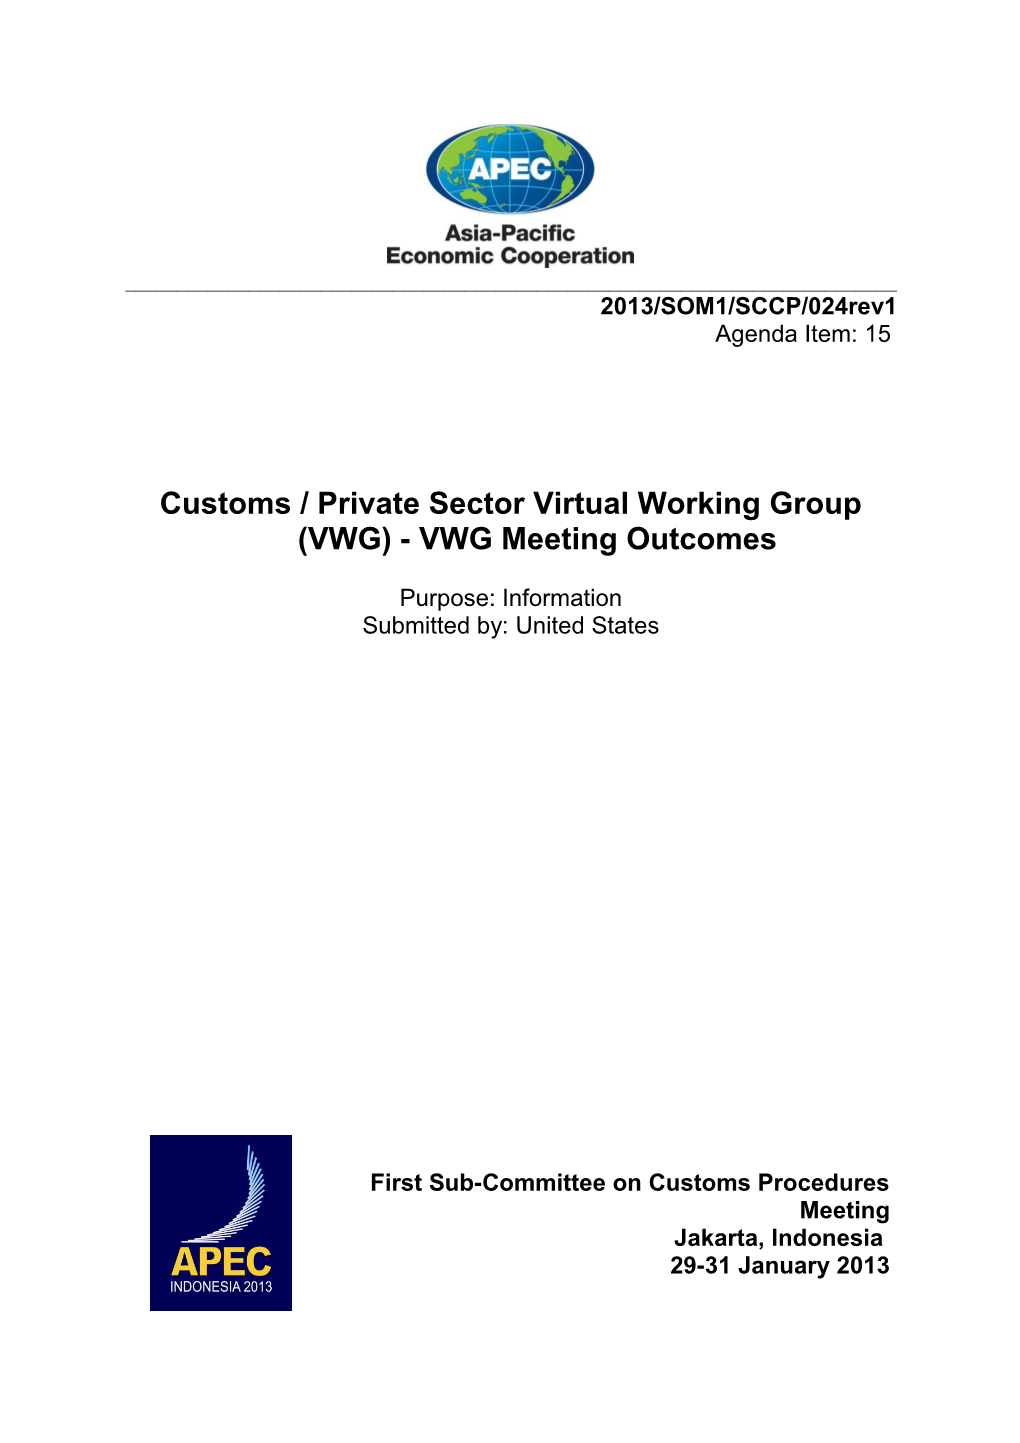 Customs / Private Sector Virtual Working Group (VWG) - VWG Meeting Outcomes